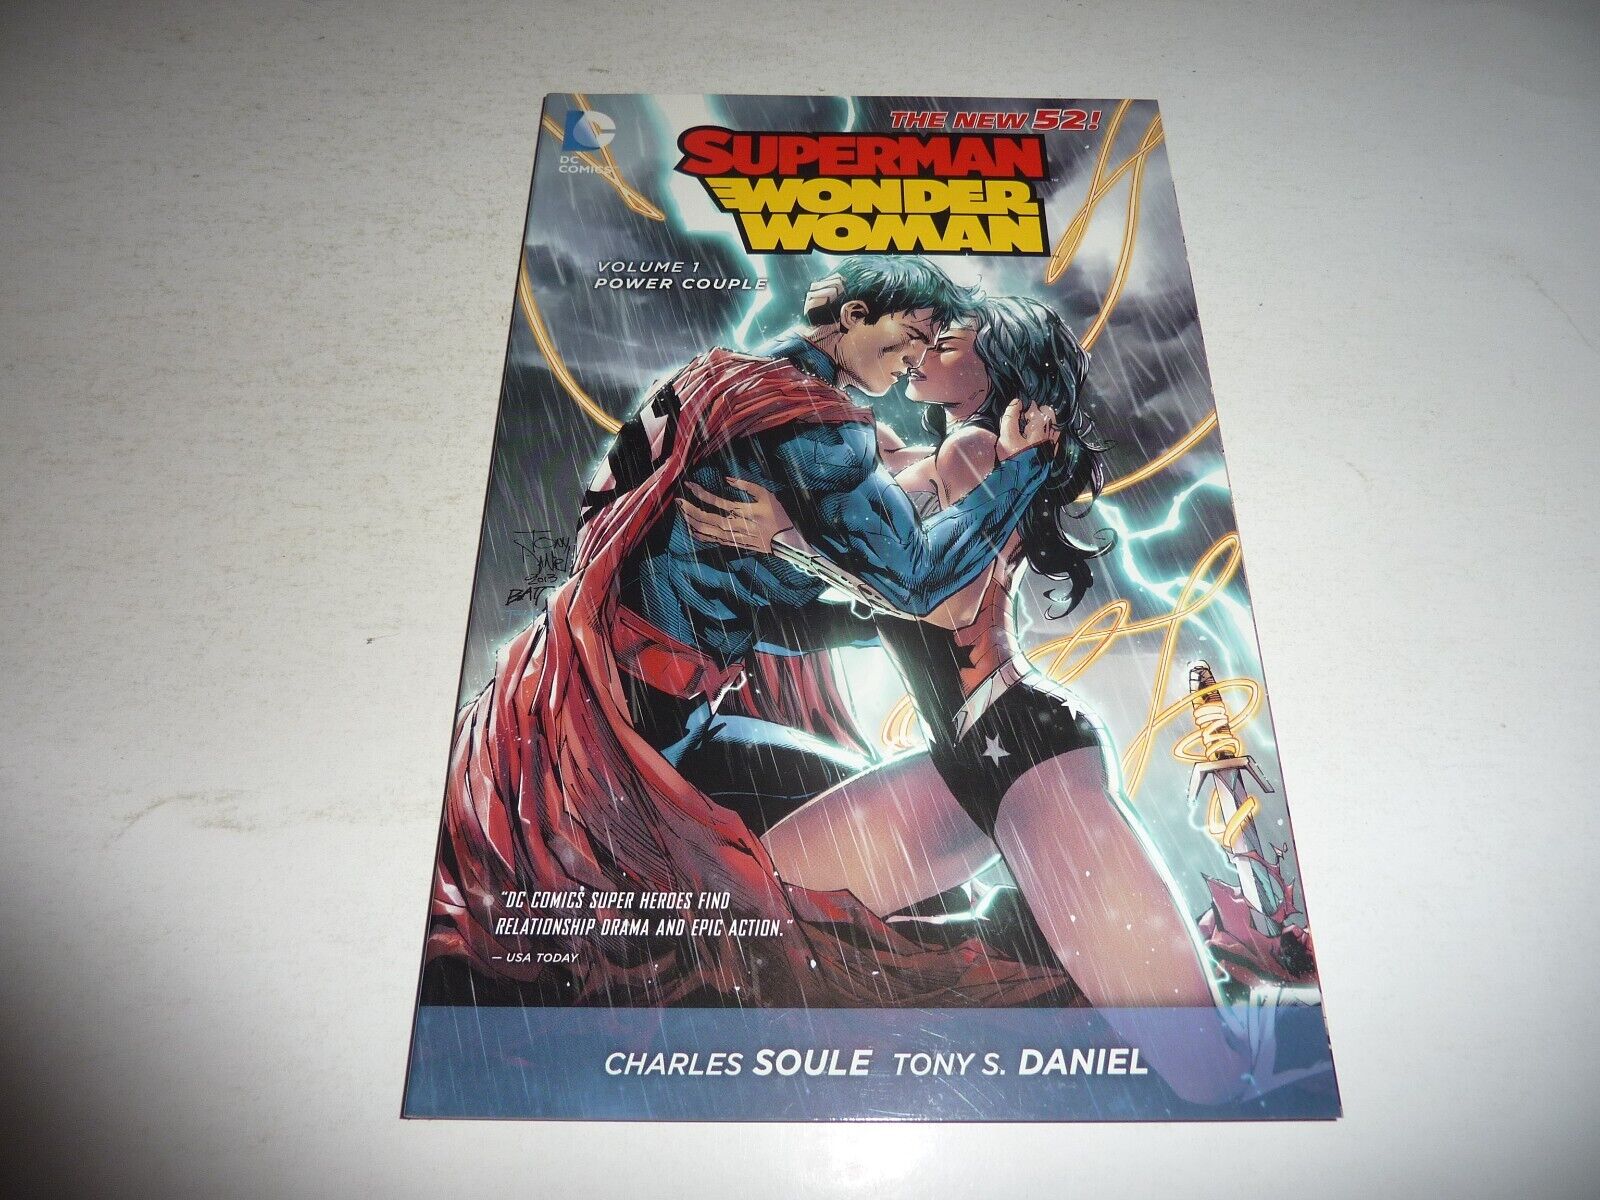 SUPERMAN/WONDER WOMAN Vol. 1 POWER COUPLE DC Comics NEW 52 TPB 2nd Print Unread